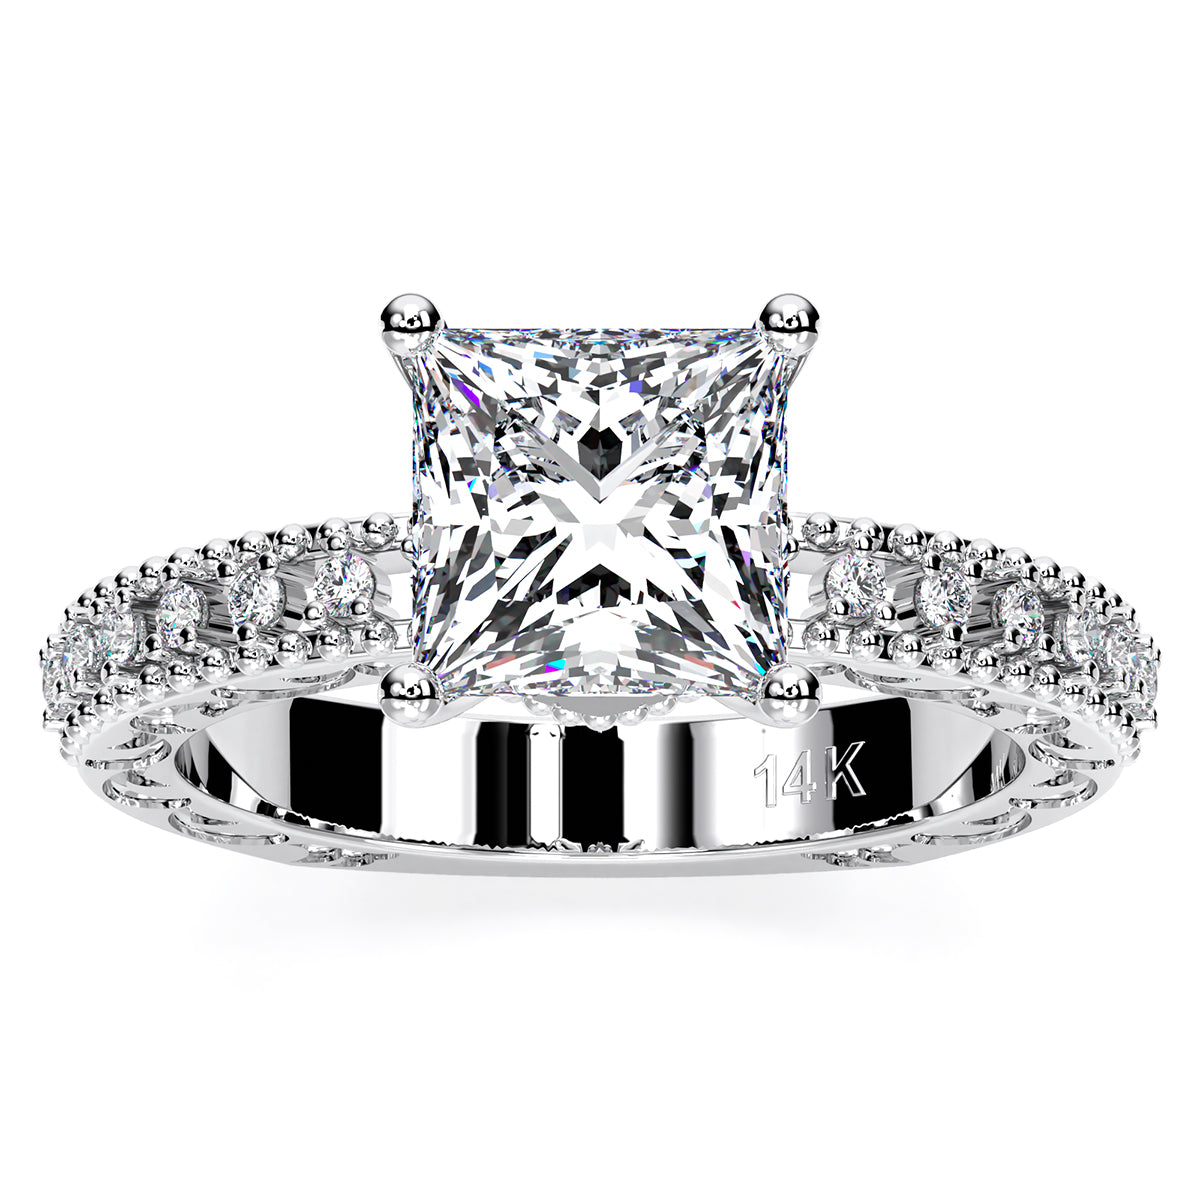 Carmel Princess Moissanite Engagement Ring whitegold